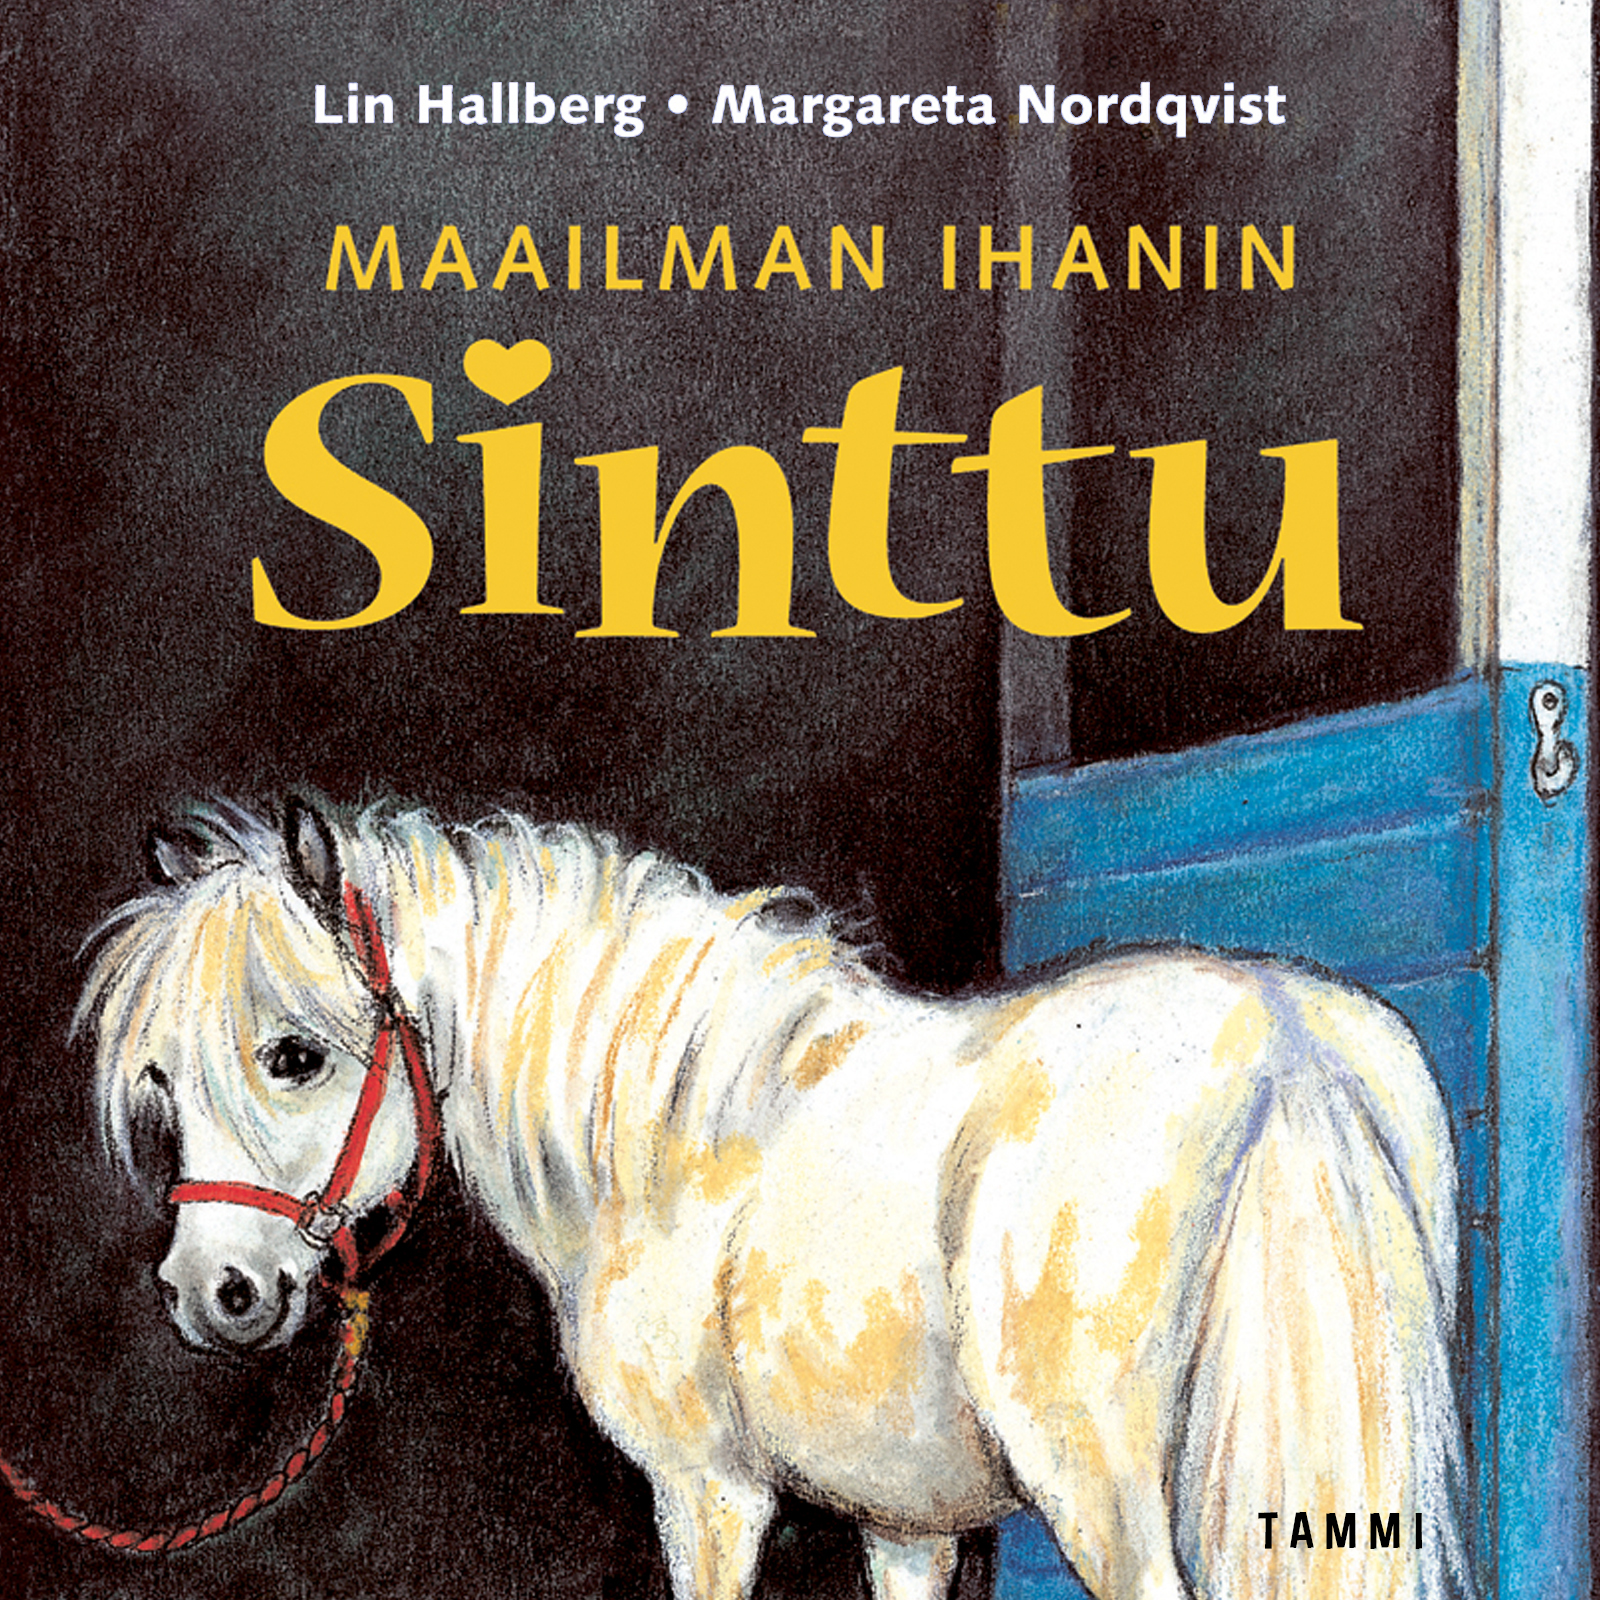 Hallberg, Lin - Maailman ihanin Sinttu, audiobook